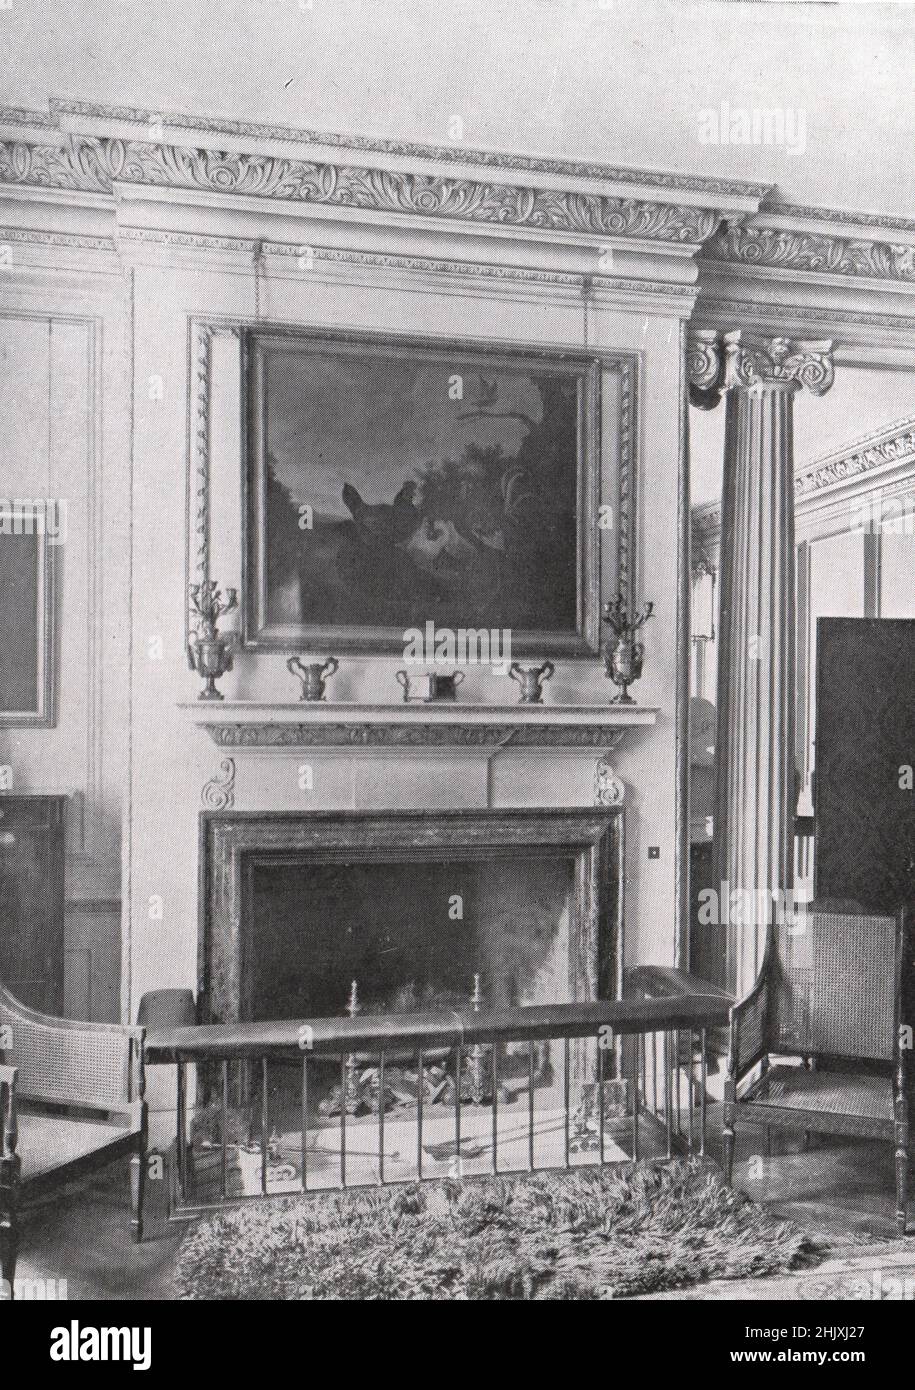 Codicote Lodge, Herts - Chimneypiece in Hall. Hertfordshire. F. S. Chesterton, architetto (1908) Foto Stock